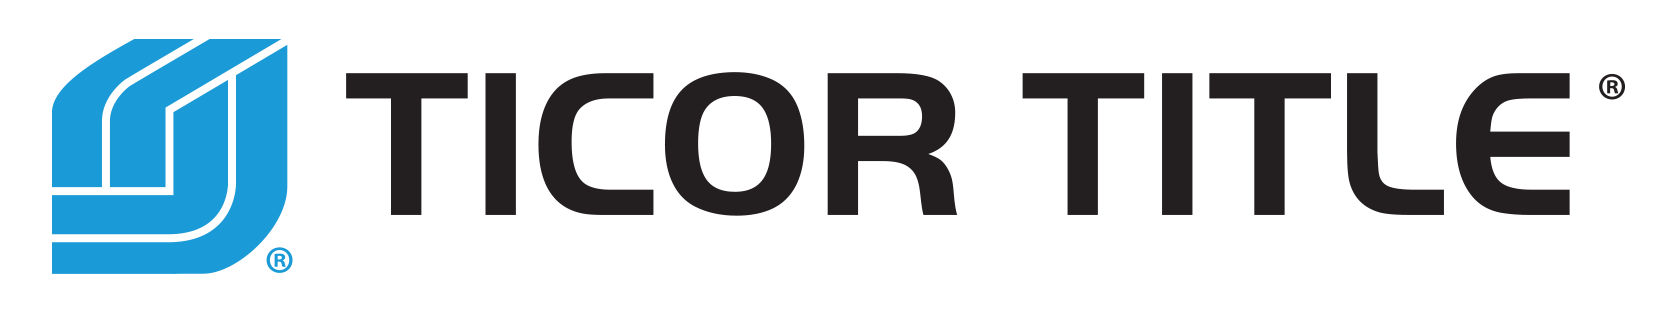 Ticor Title Company Company Logo